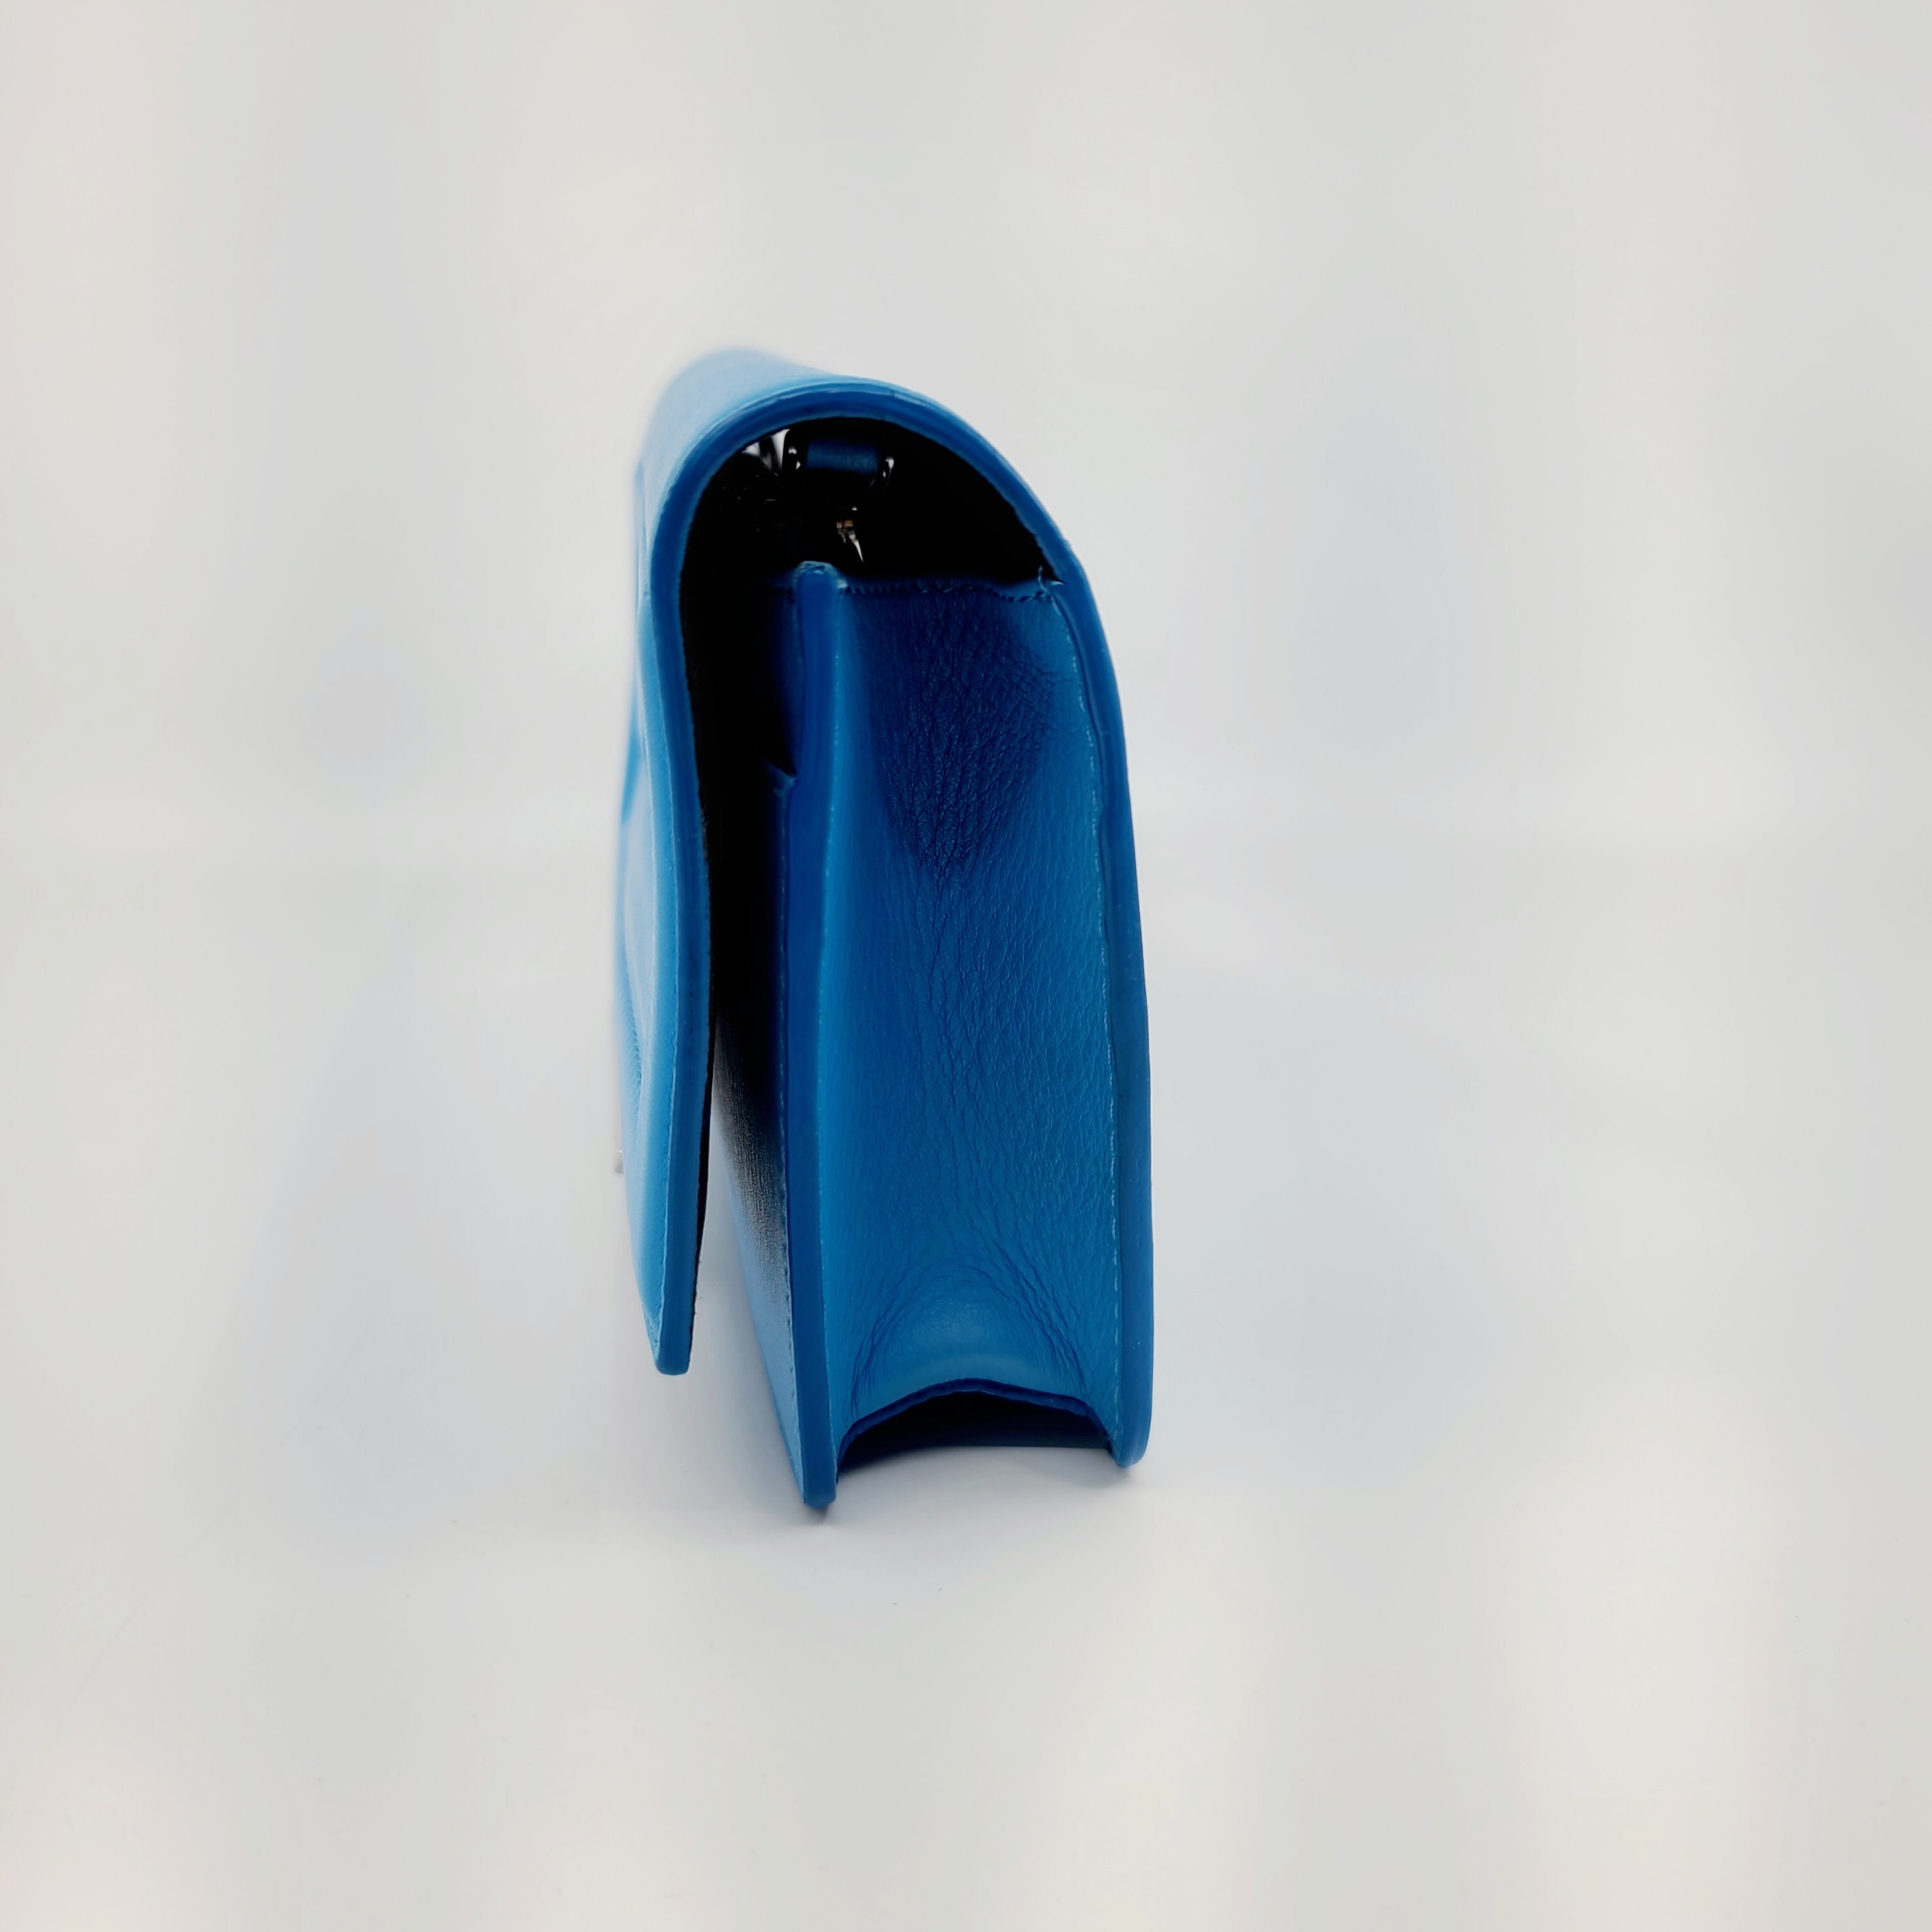 FENDI Wallet On Chain Flap Vitello Tube Blue Leather Cross Body Bag